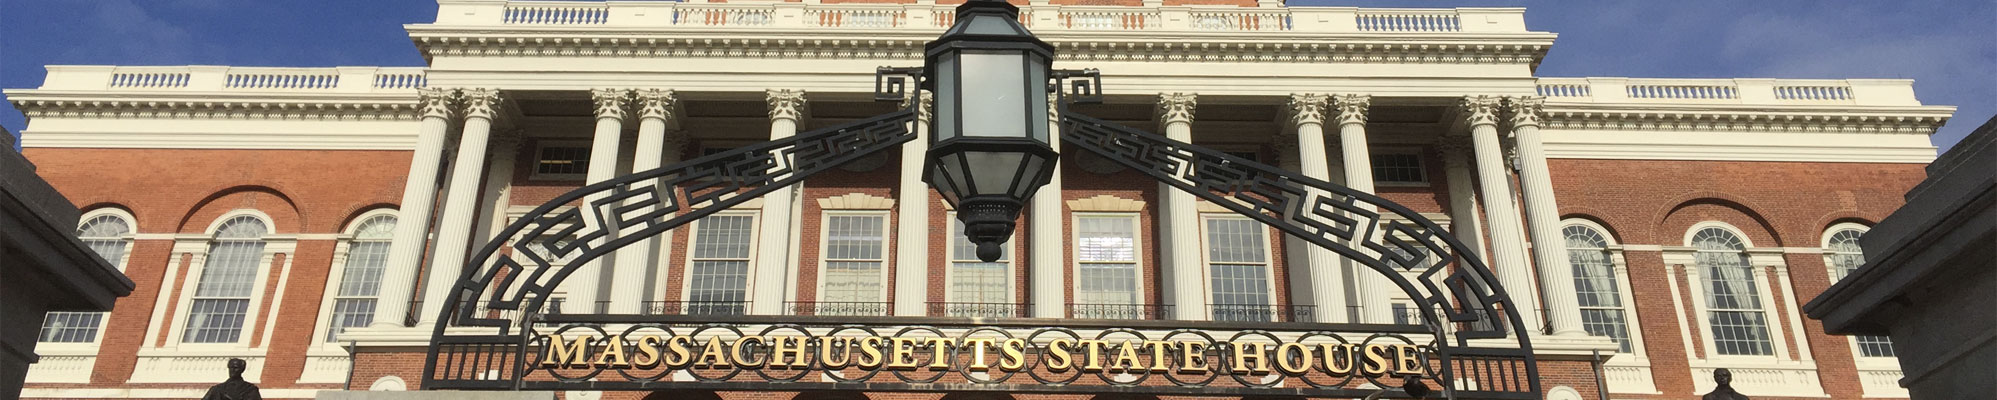 Massachusetts State House Gate